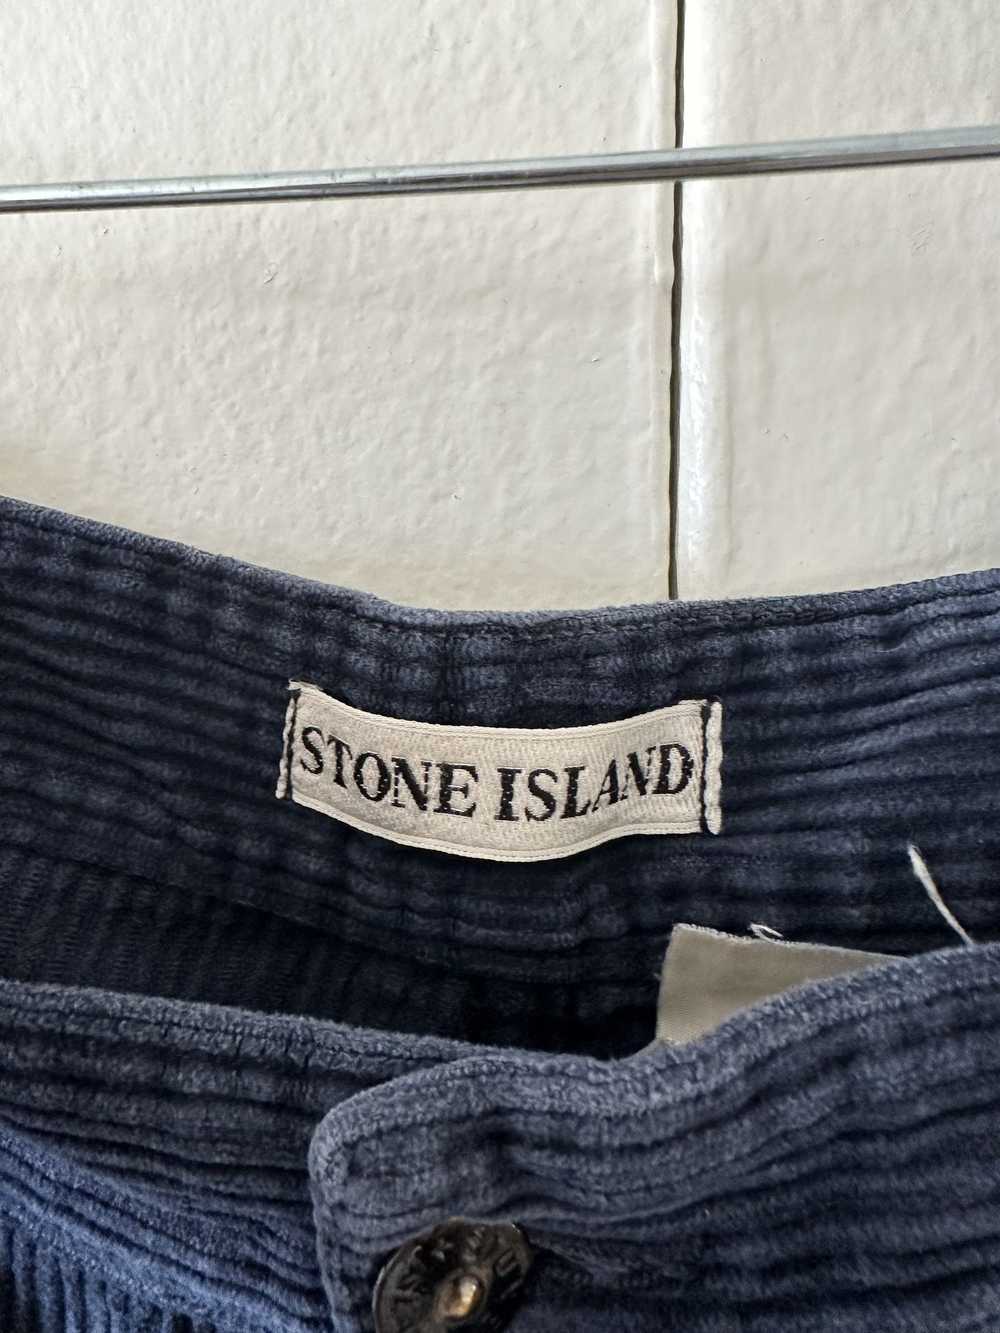 Stone Island Stone Island Corduroy Trousers - image 3